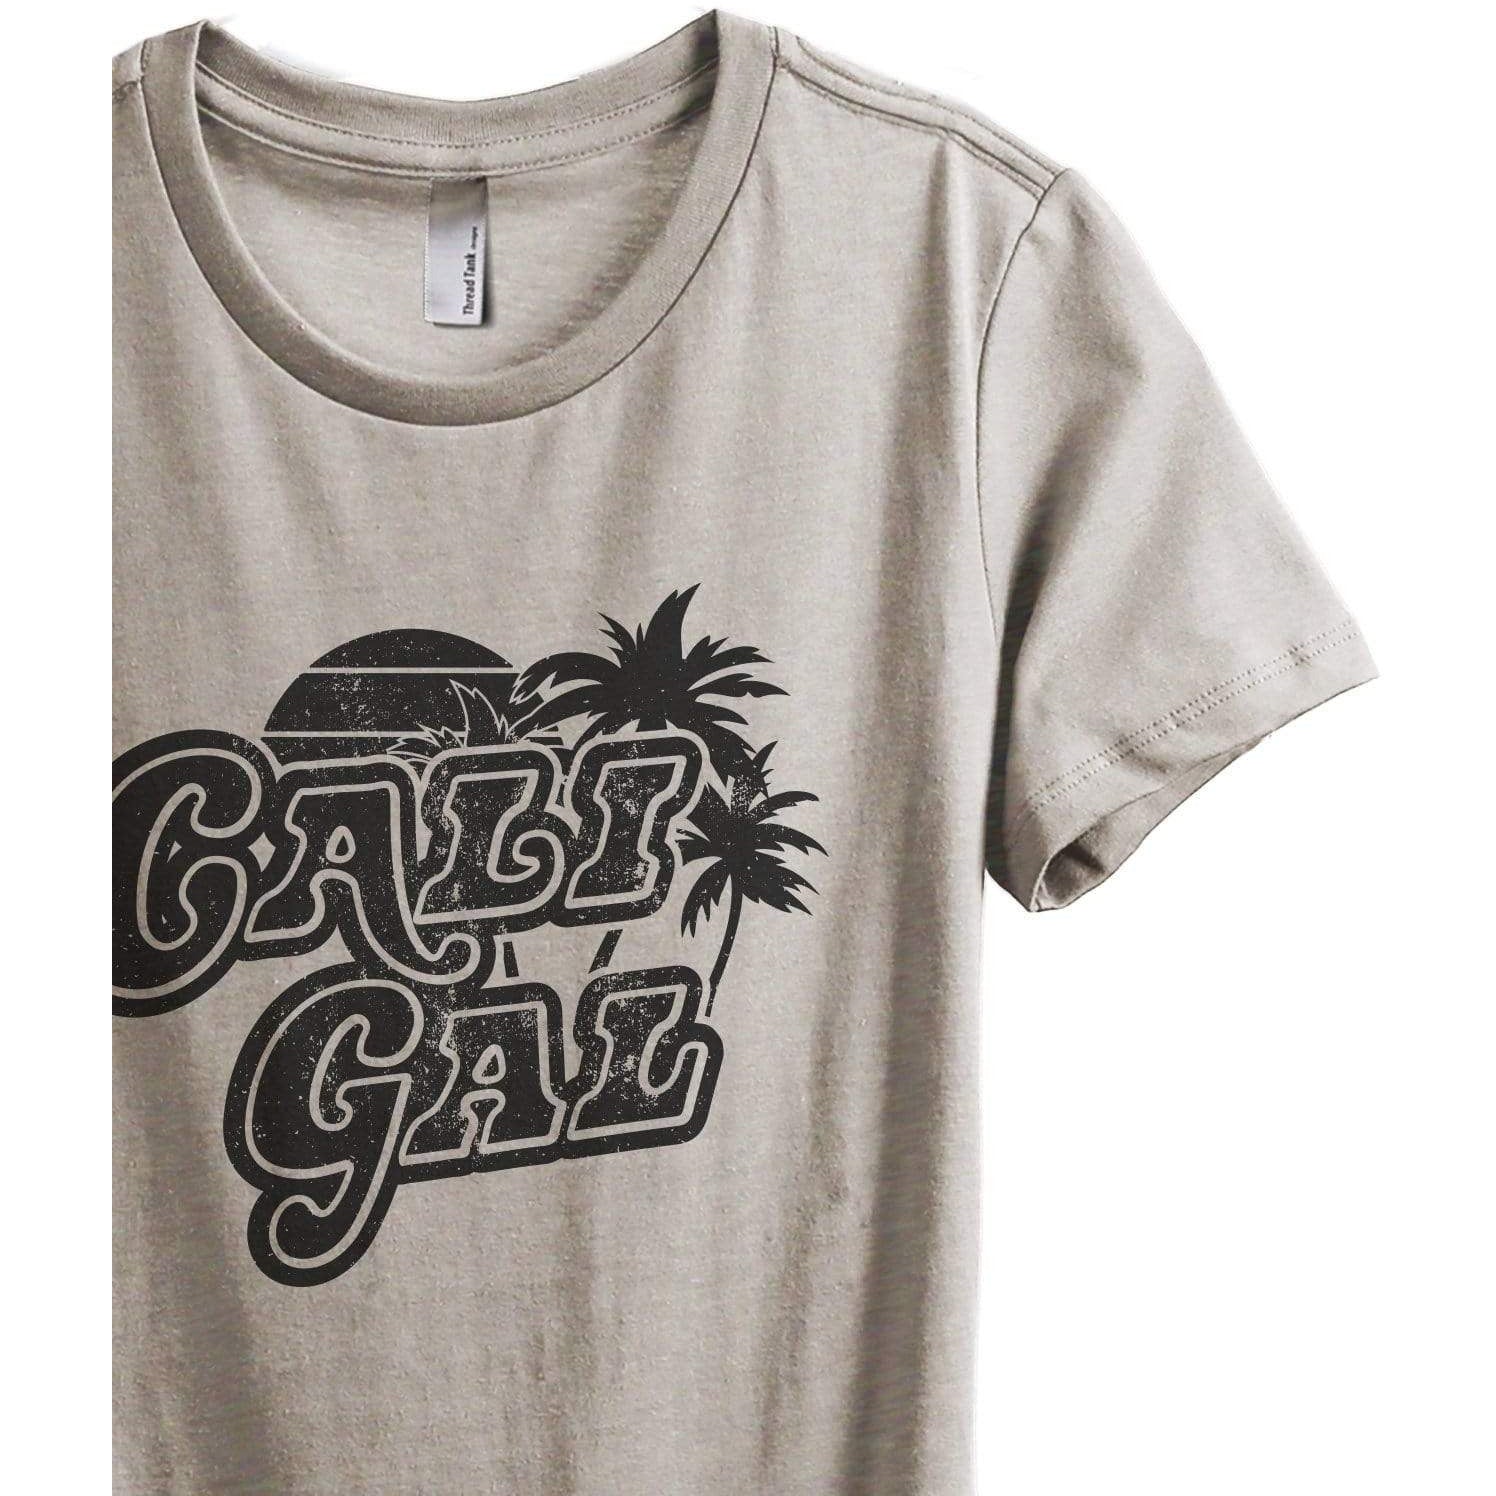 California Gal Women's Relaxed Crewneck T-Shirt Top Tee Heather Tan Closeup Details